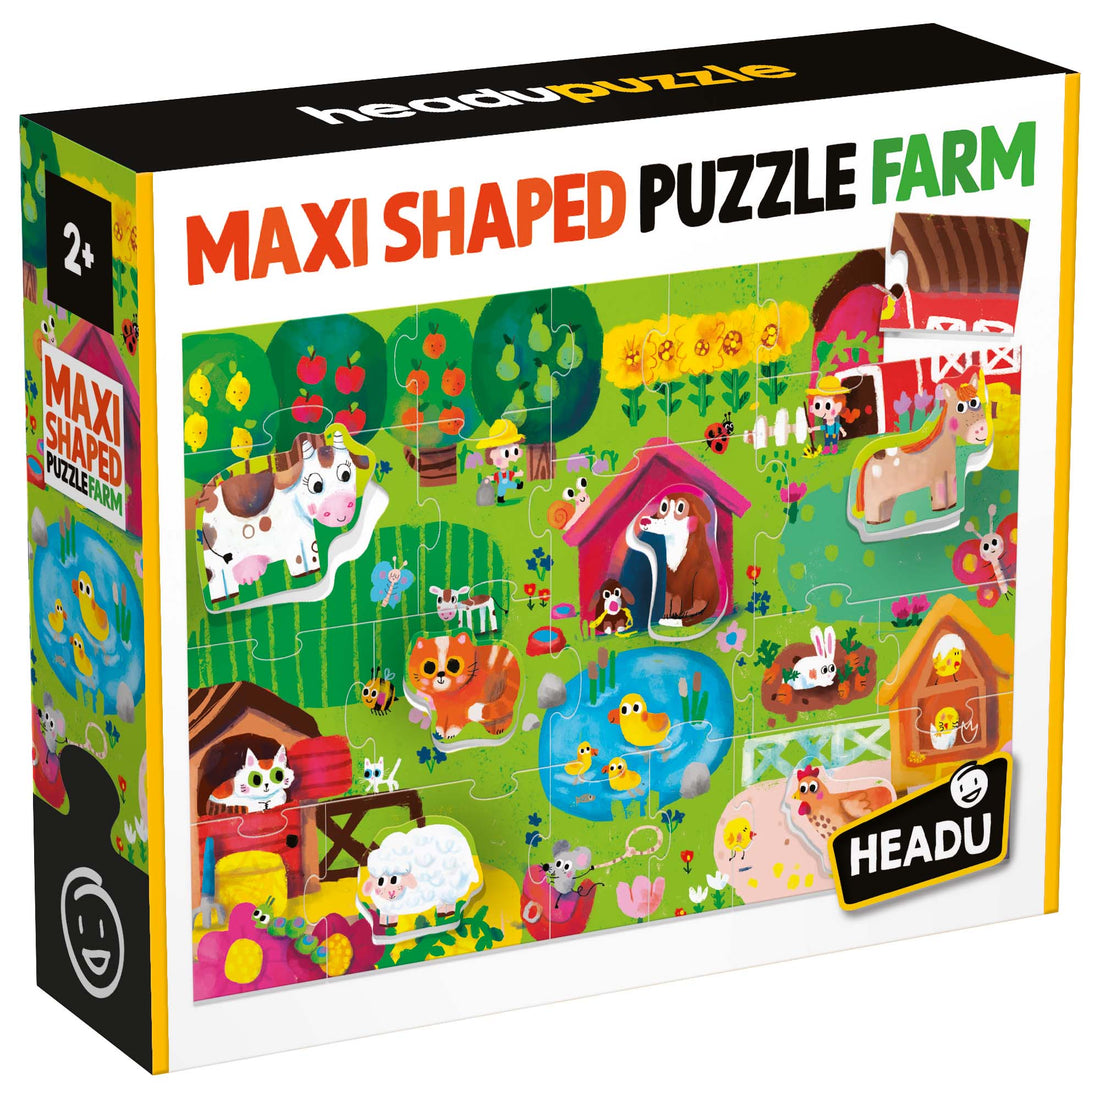 Ecoplay - Shaped Puzzle Farm